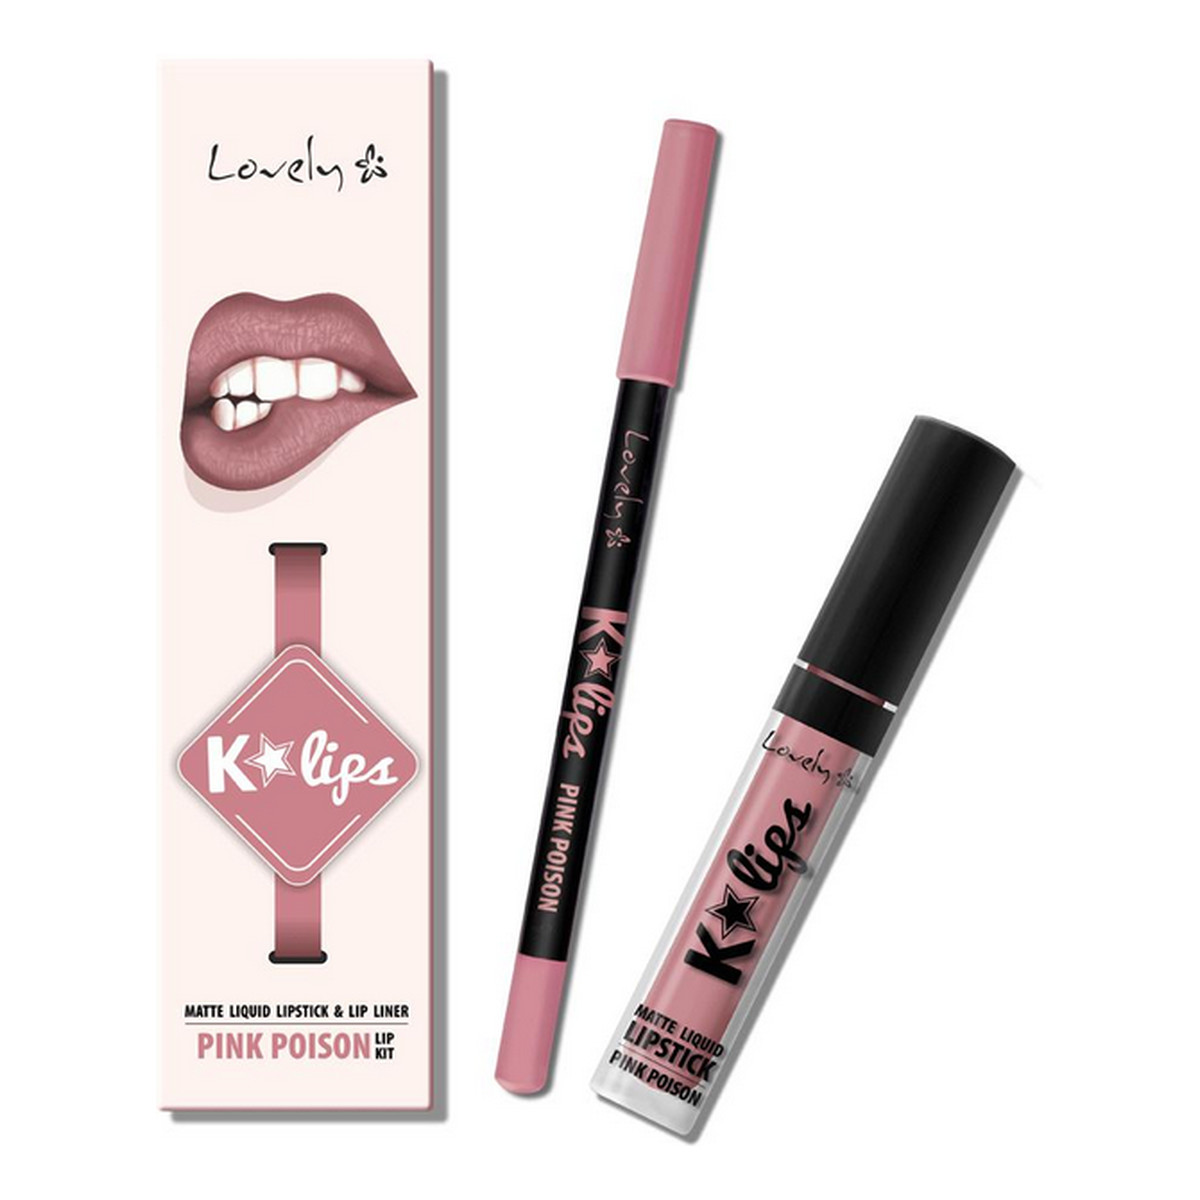 Lovely K-Lips Zestaw Matte Liquid Lipstick & Lip liner Neutral Beauty